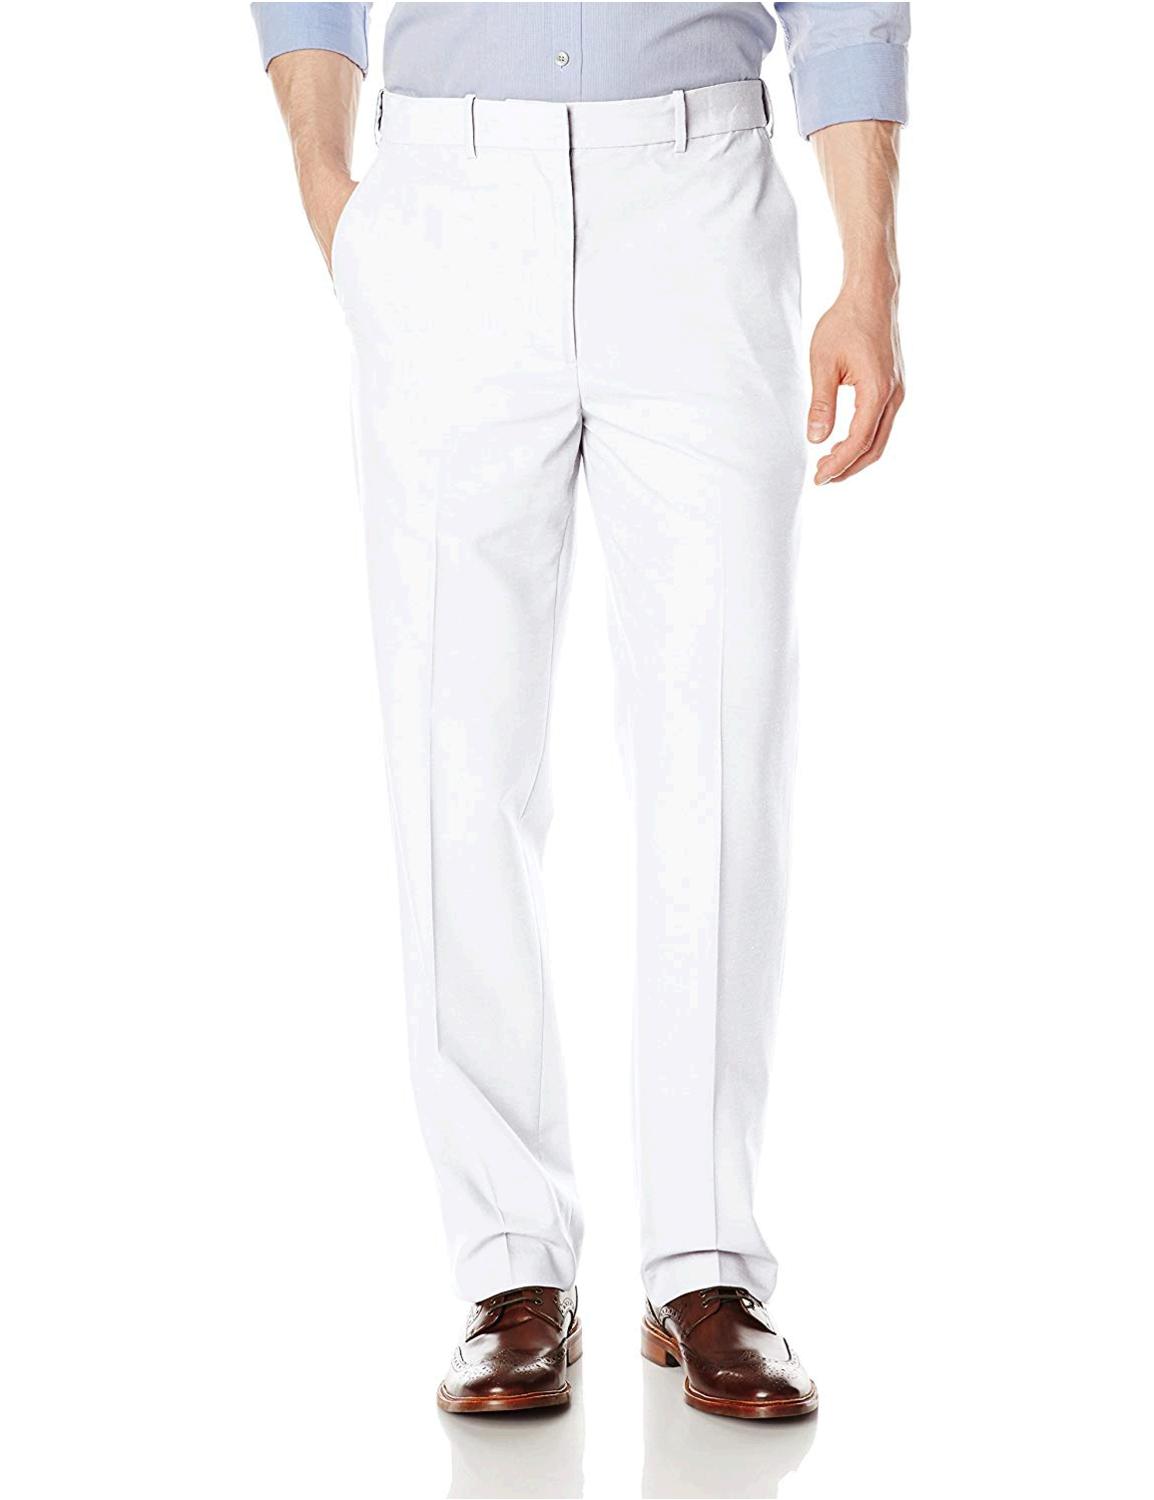 Savane Men's Flat Front Textured Linen Pants,, Bright White, Size 42W x ...